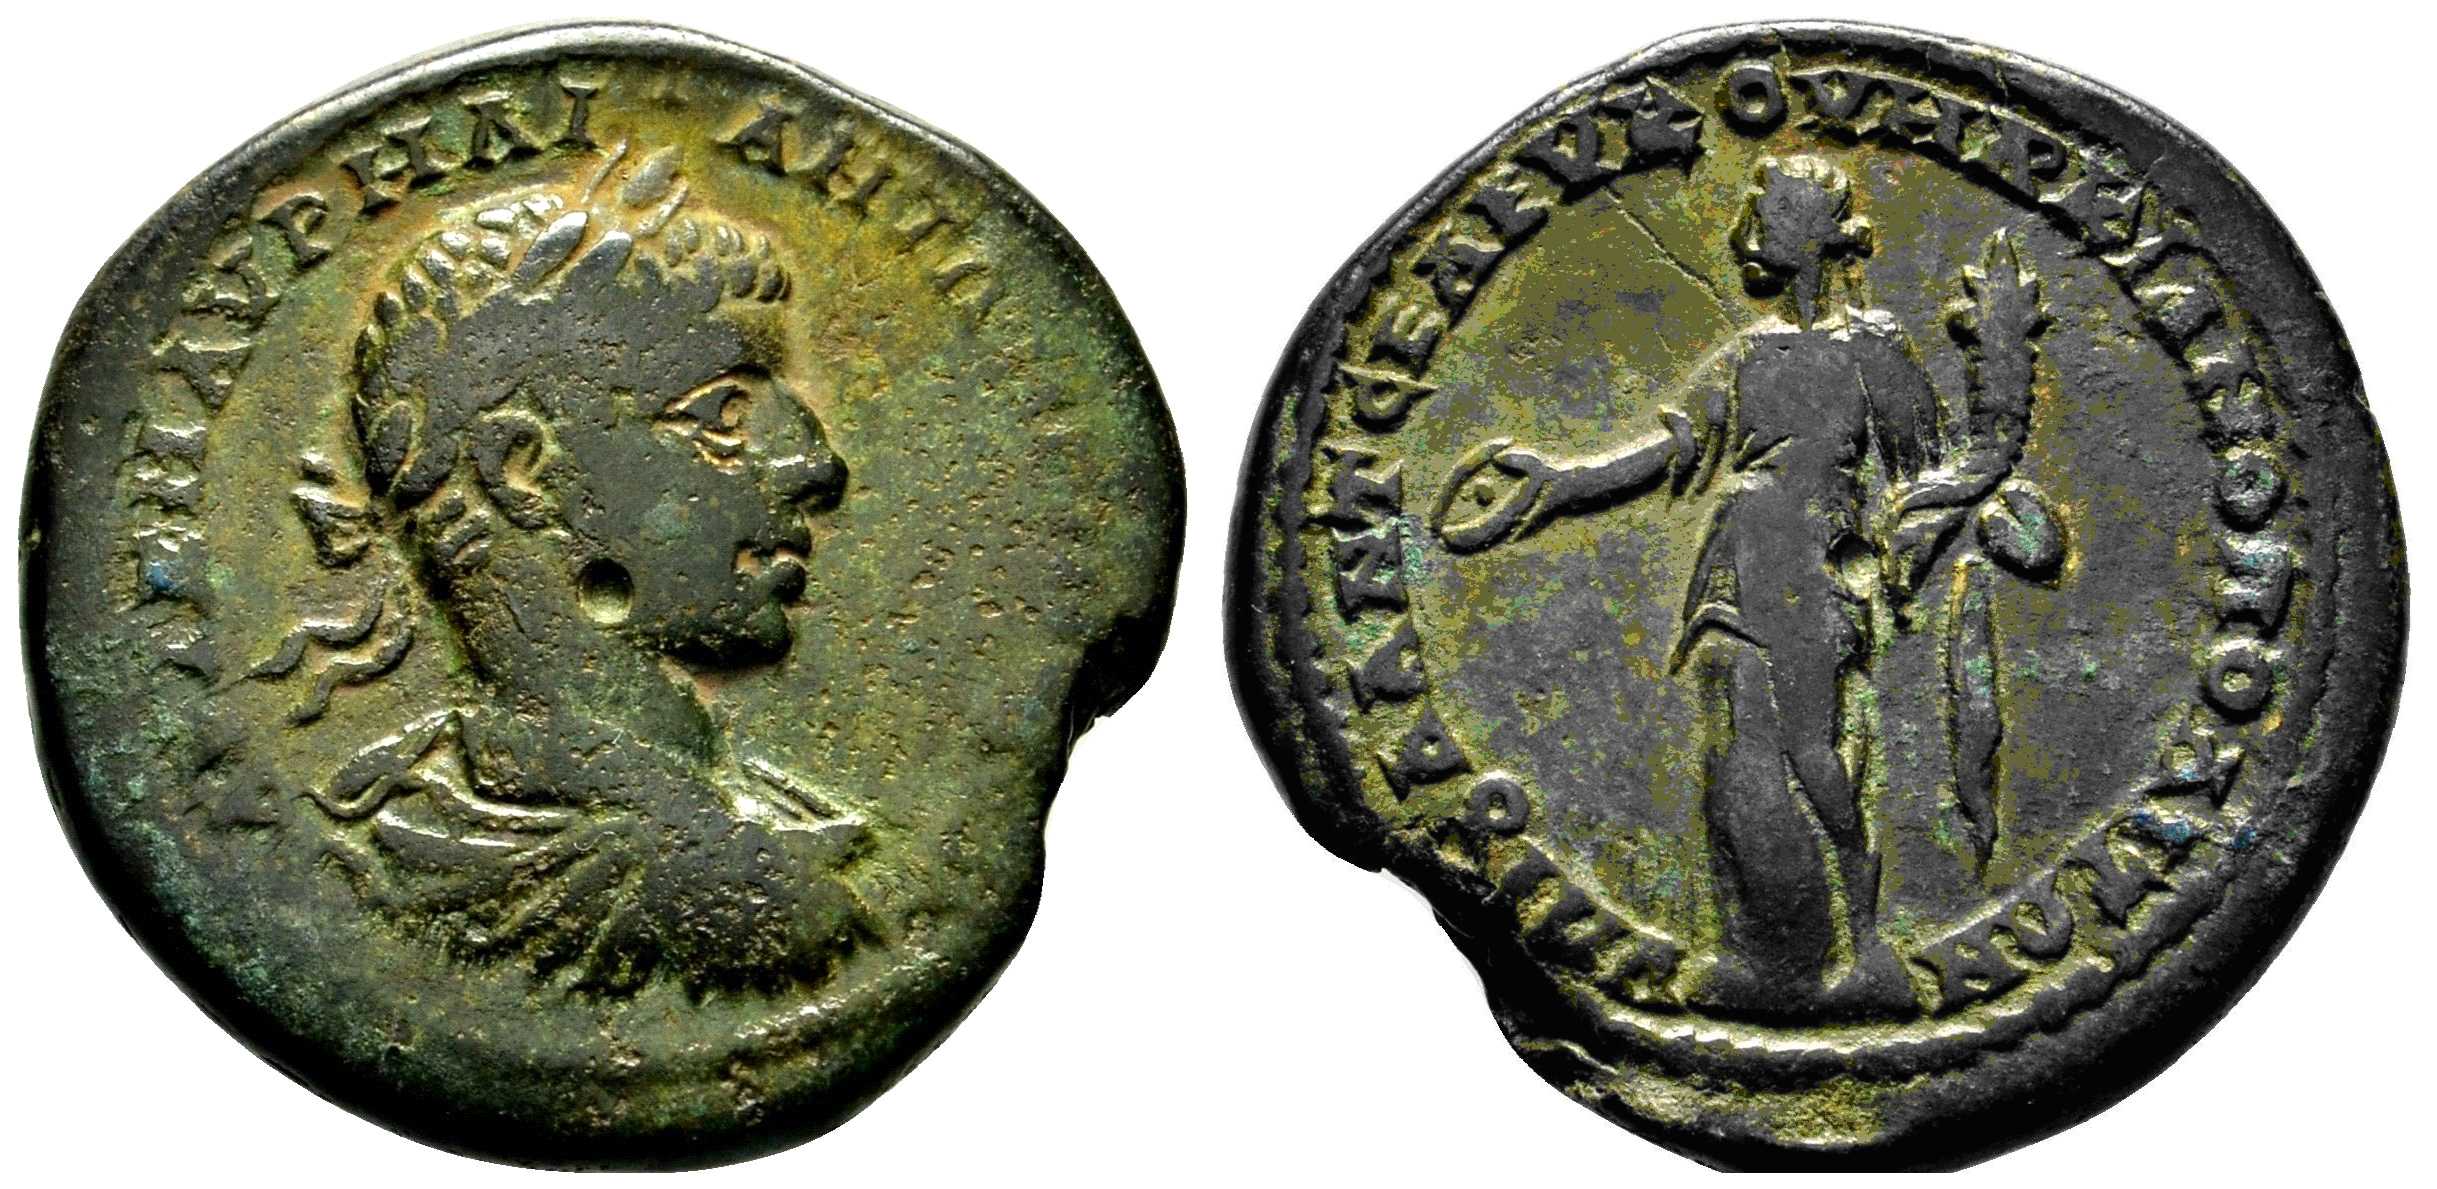 5841 Marcianopolis Moesia Inferior Elagabalus AE